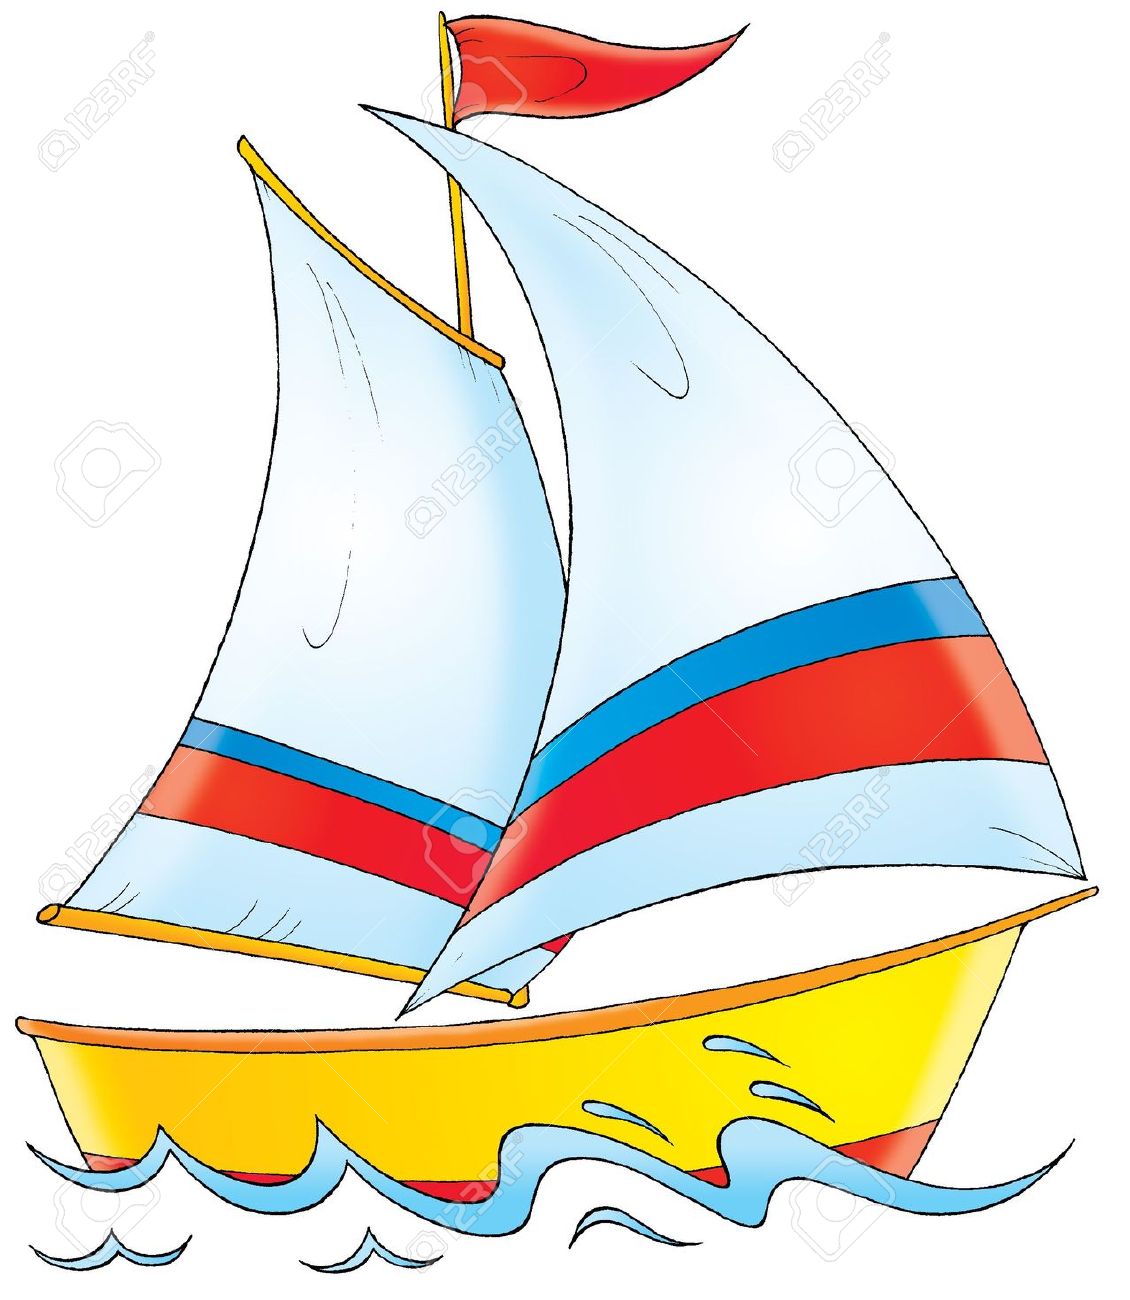 sailboat clipart yacht